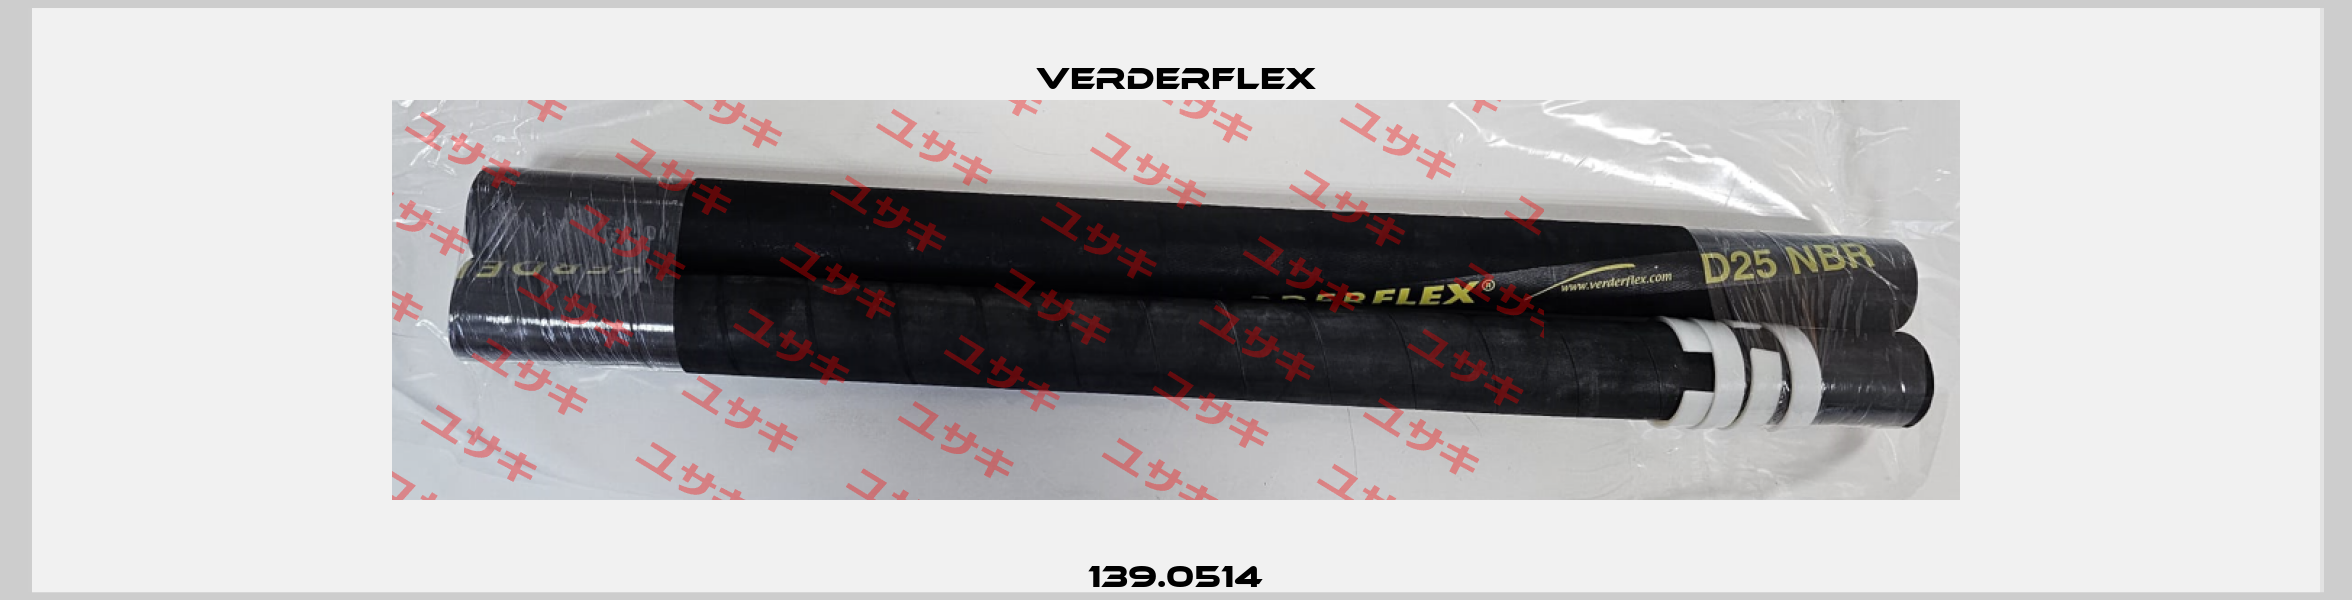 139.0514 Verderflex